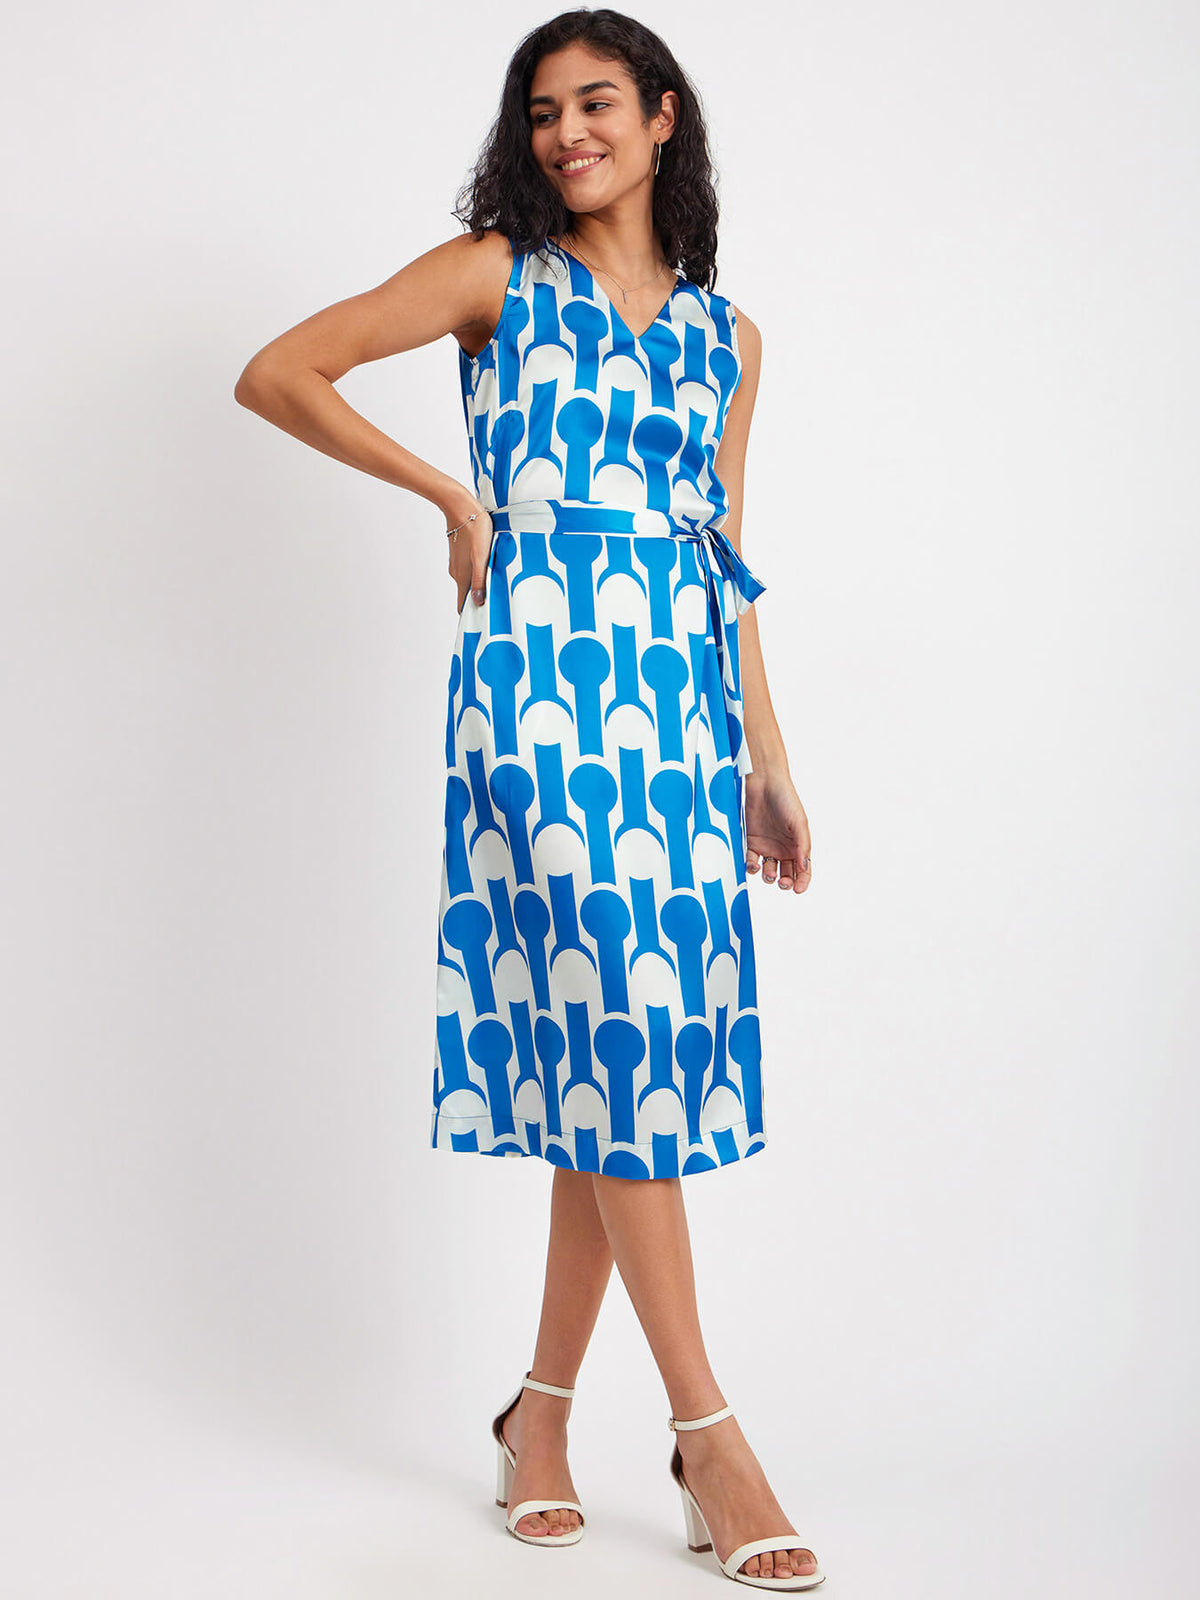 Satin Geometric Print Dress - Blue And White